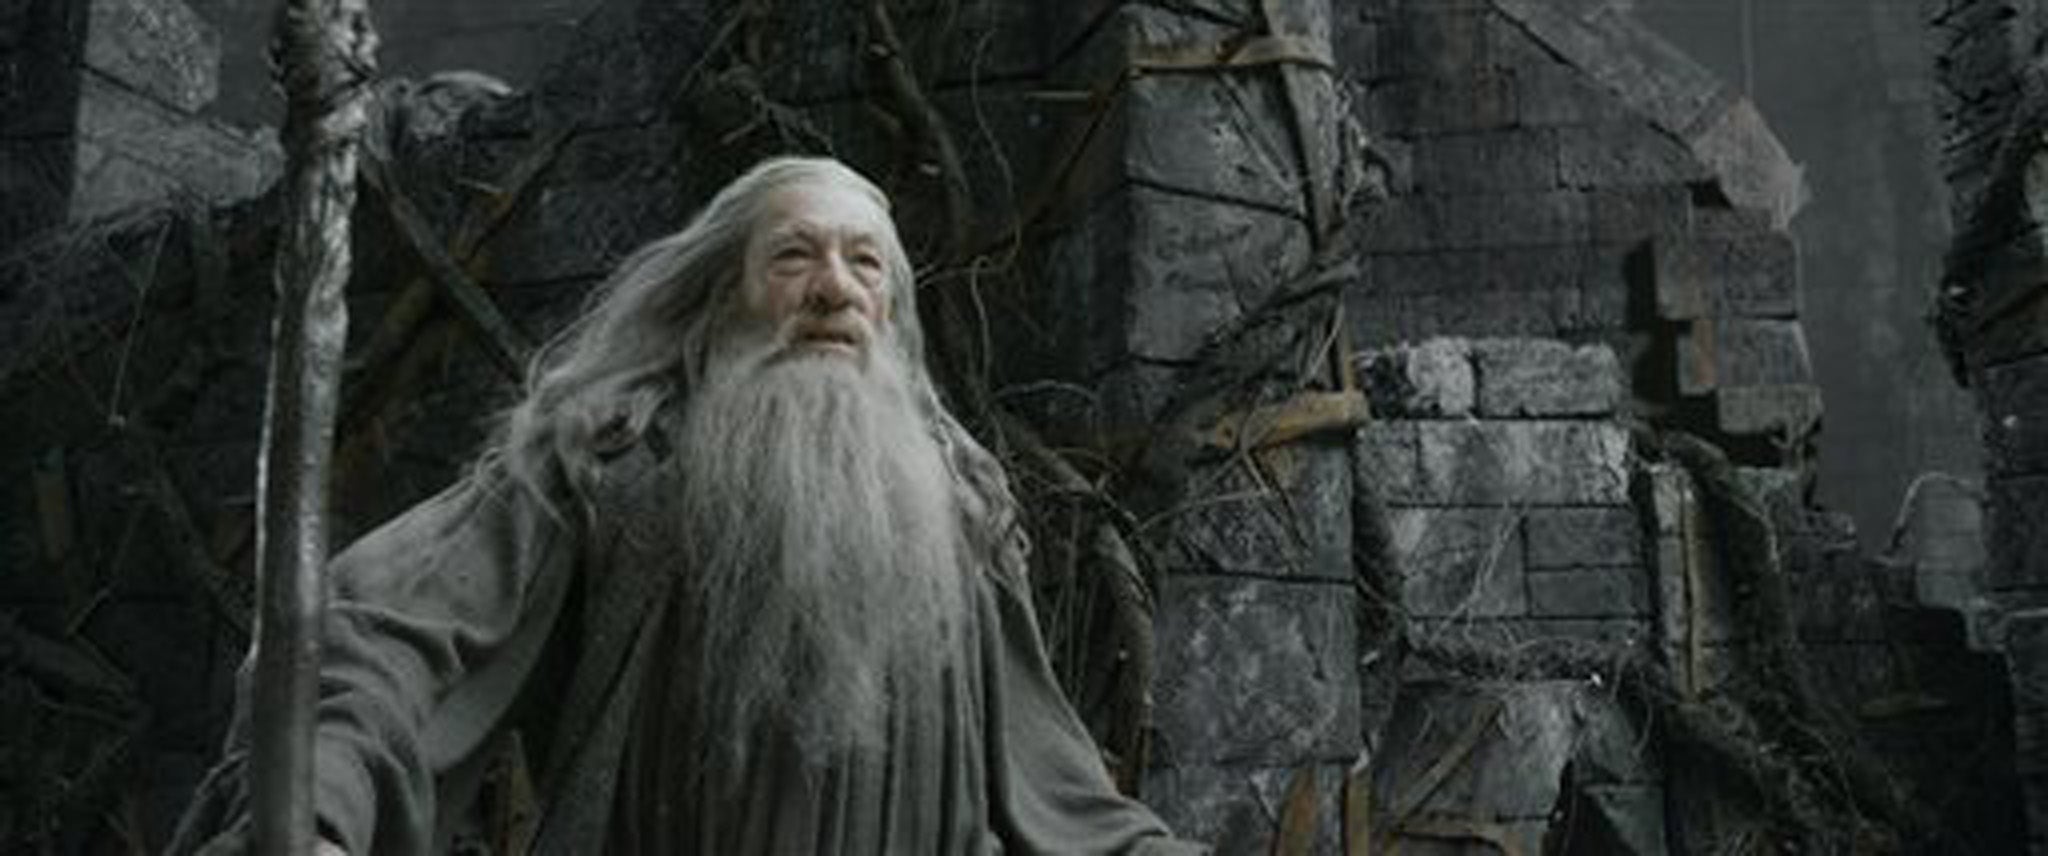 Ian McKellen stars in The Hobbit: The Desolation of Smaug